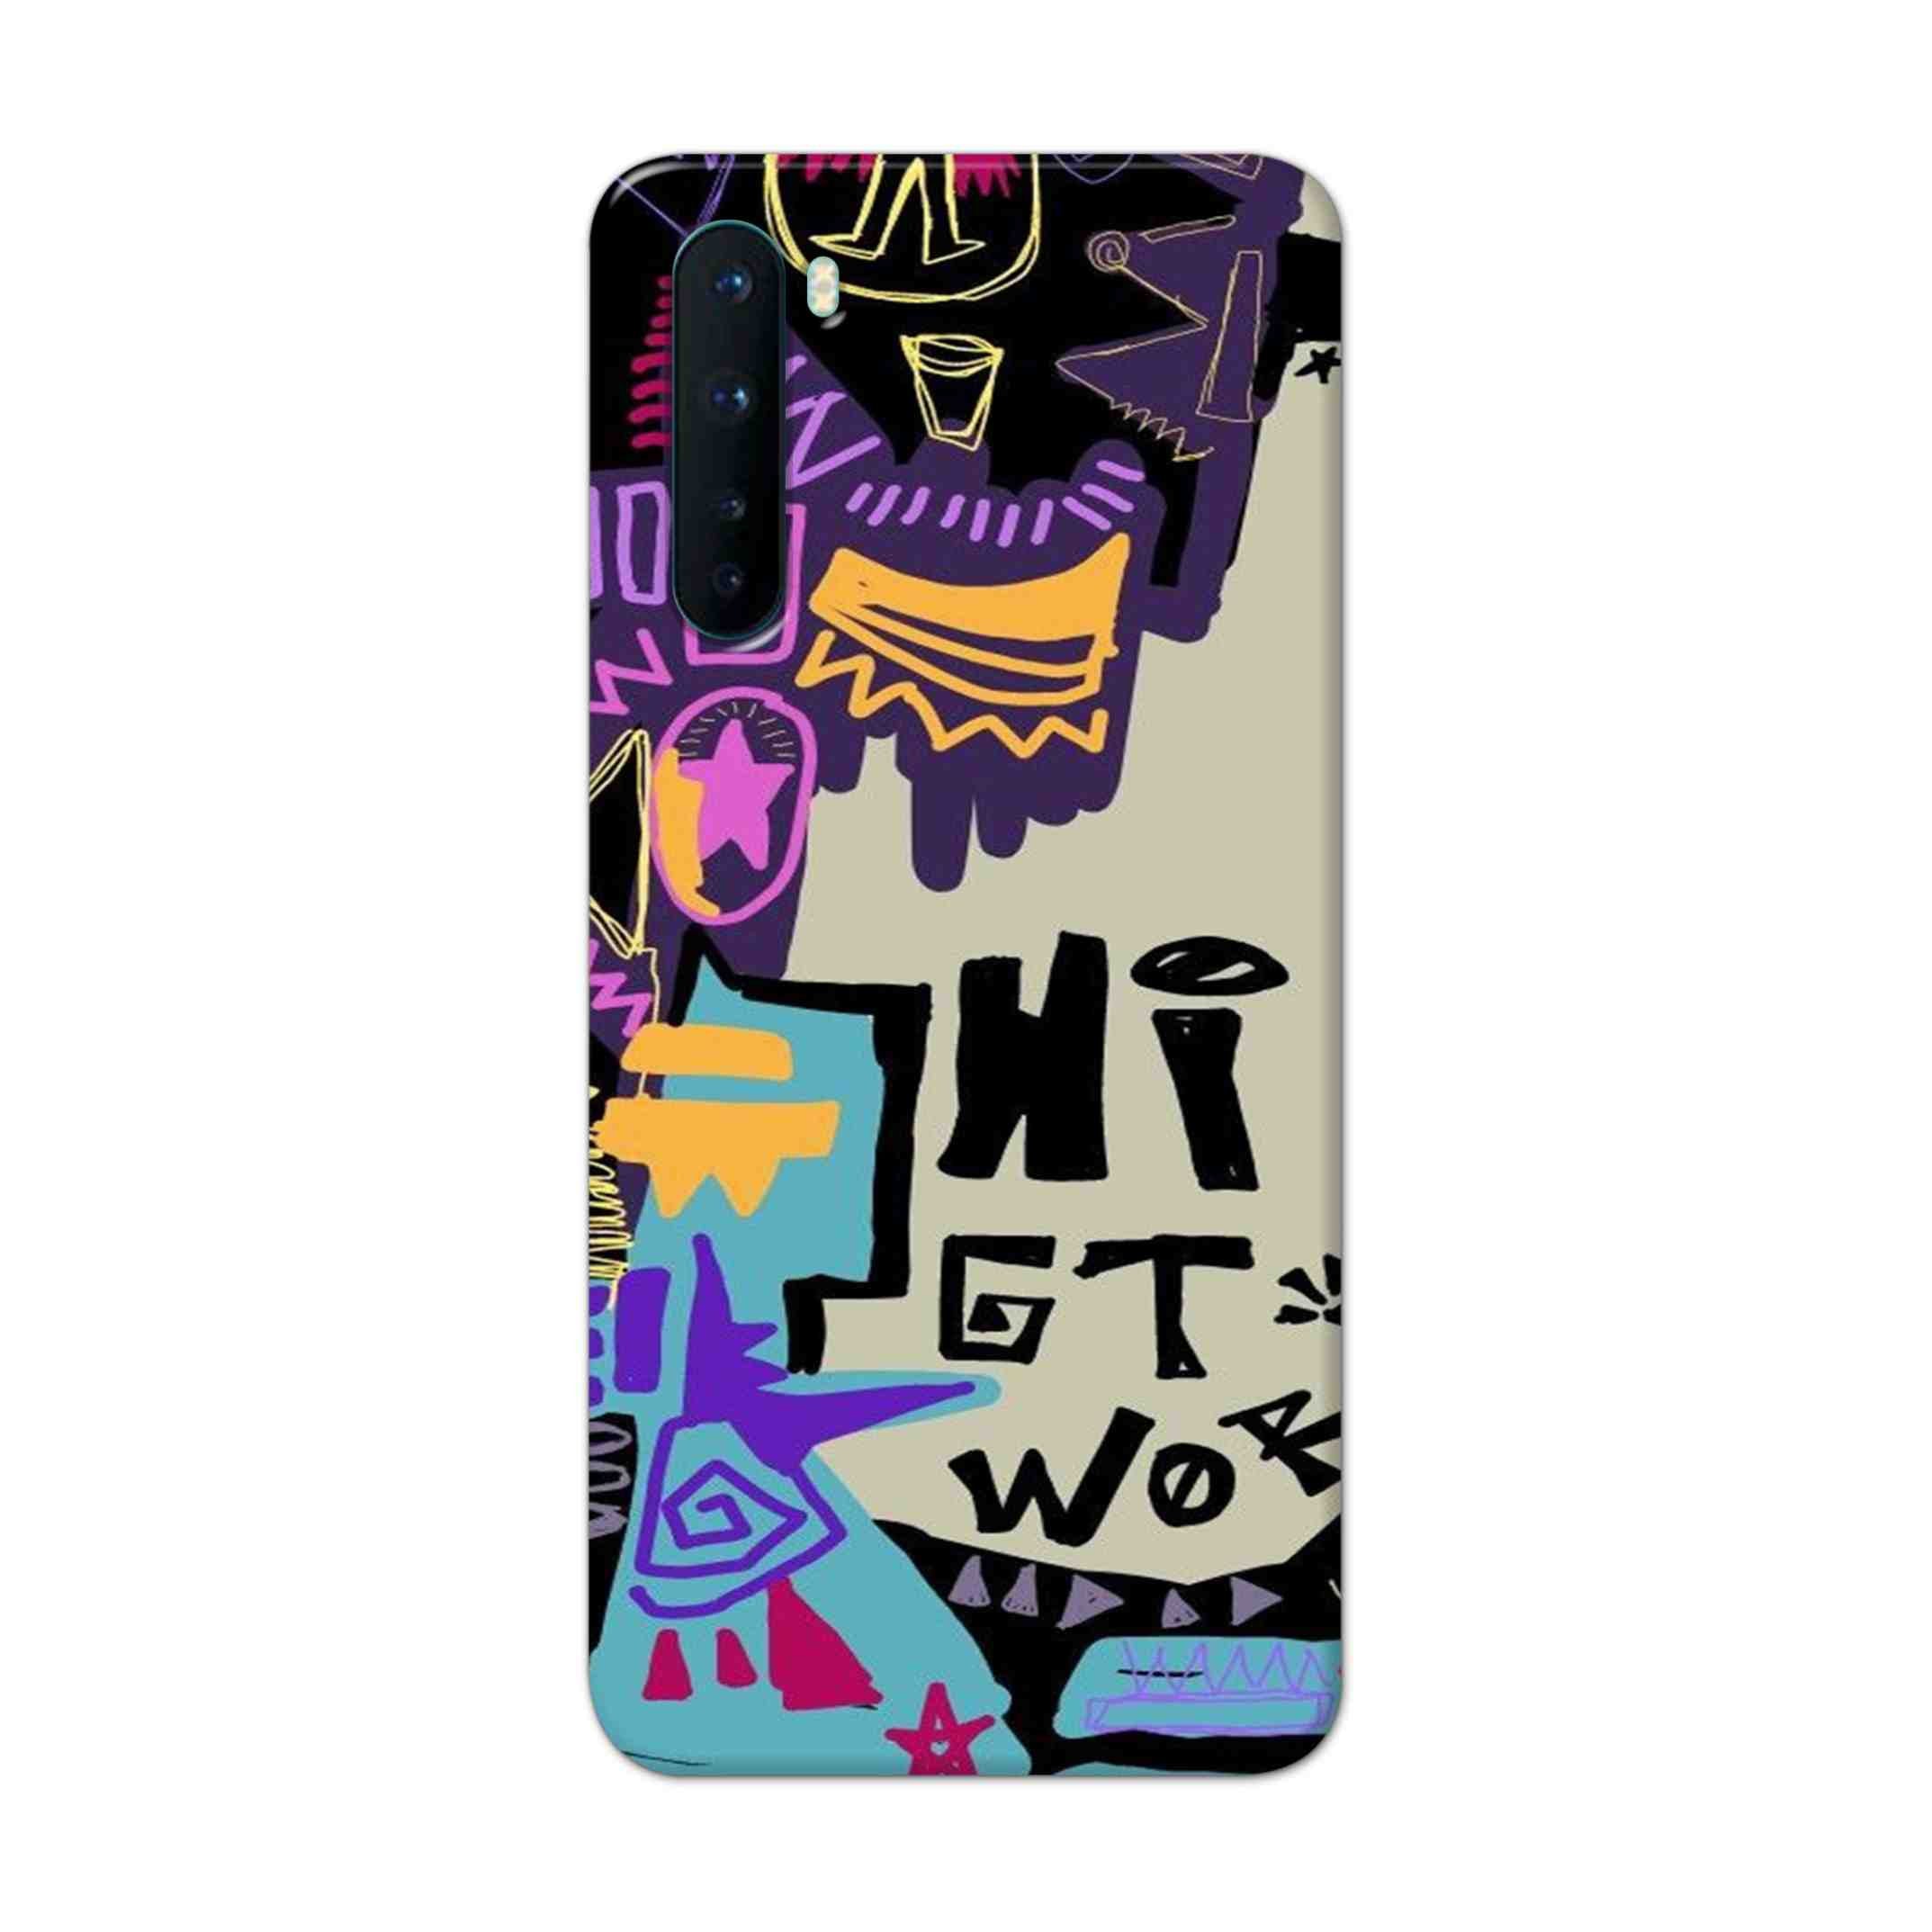 Buy Hi Gt World Hard Back Mobile Phone Case Cover For OnePlus Nord Online